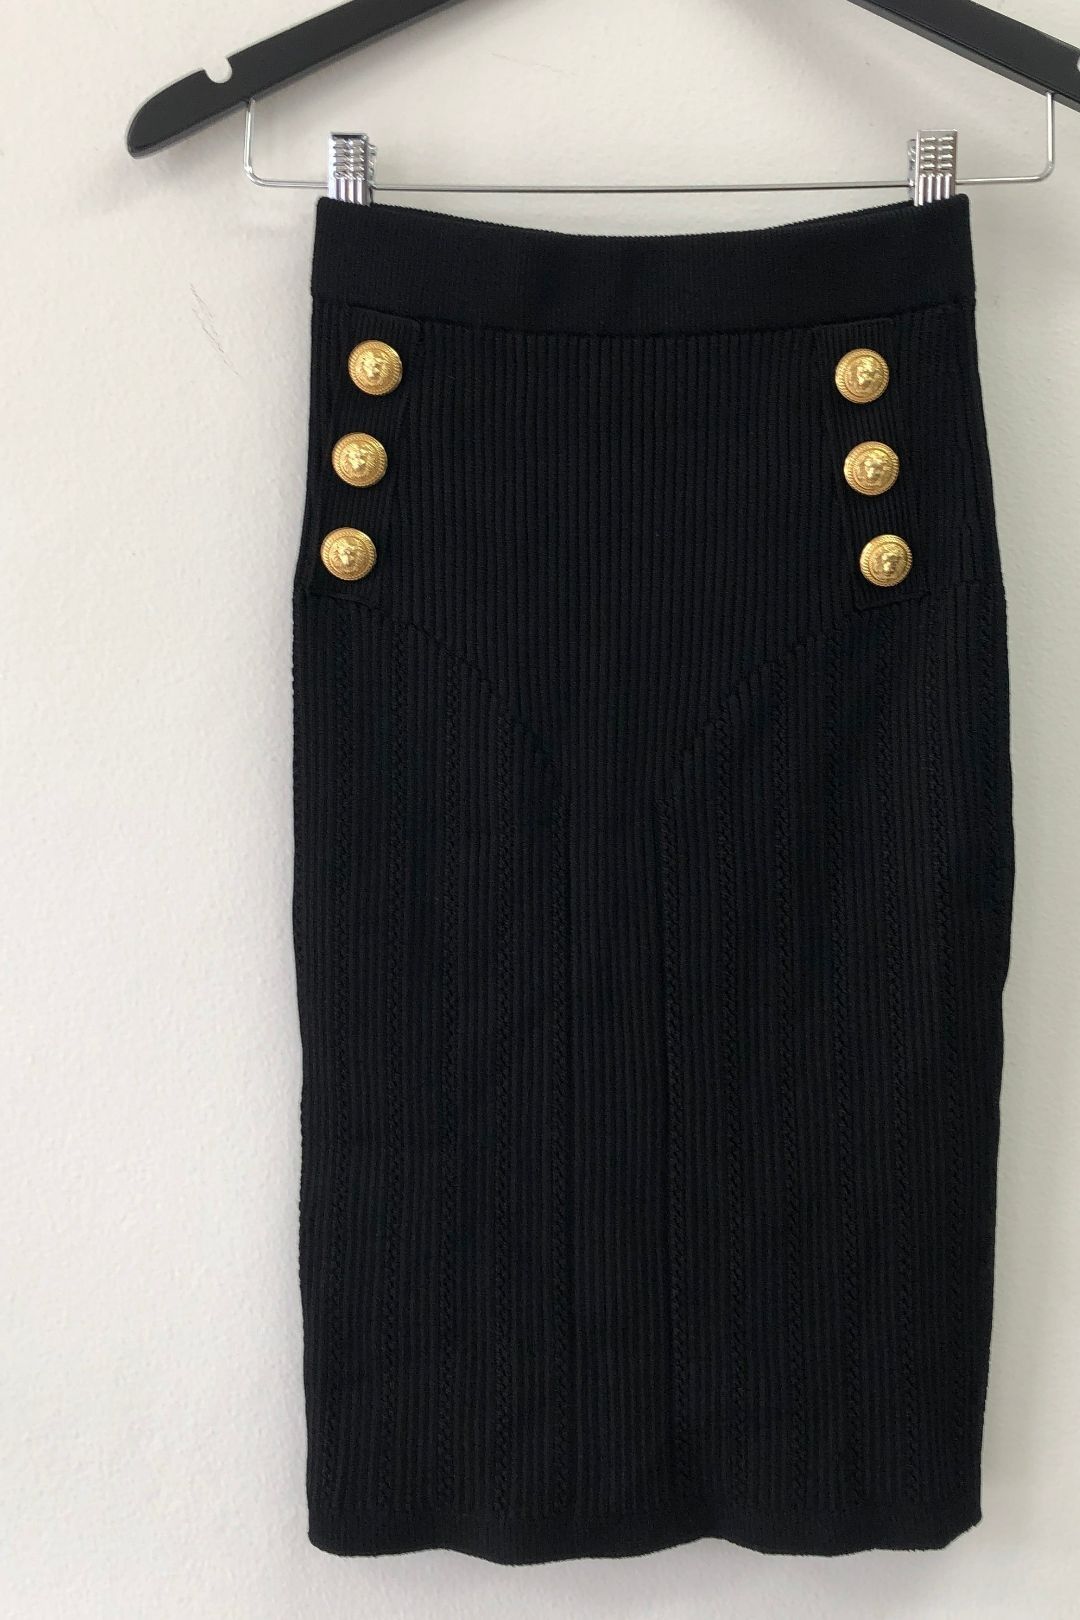 Balmain - Button Embellished Knit Black Skirt